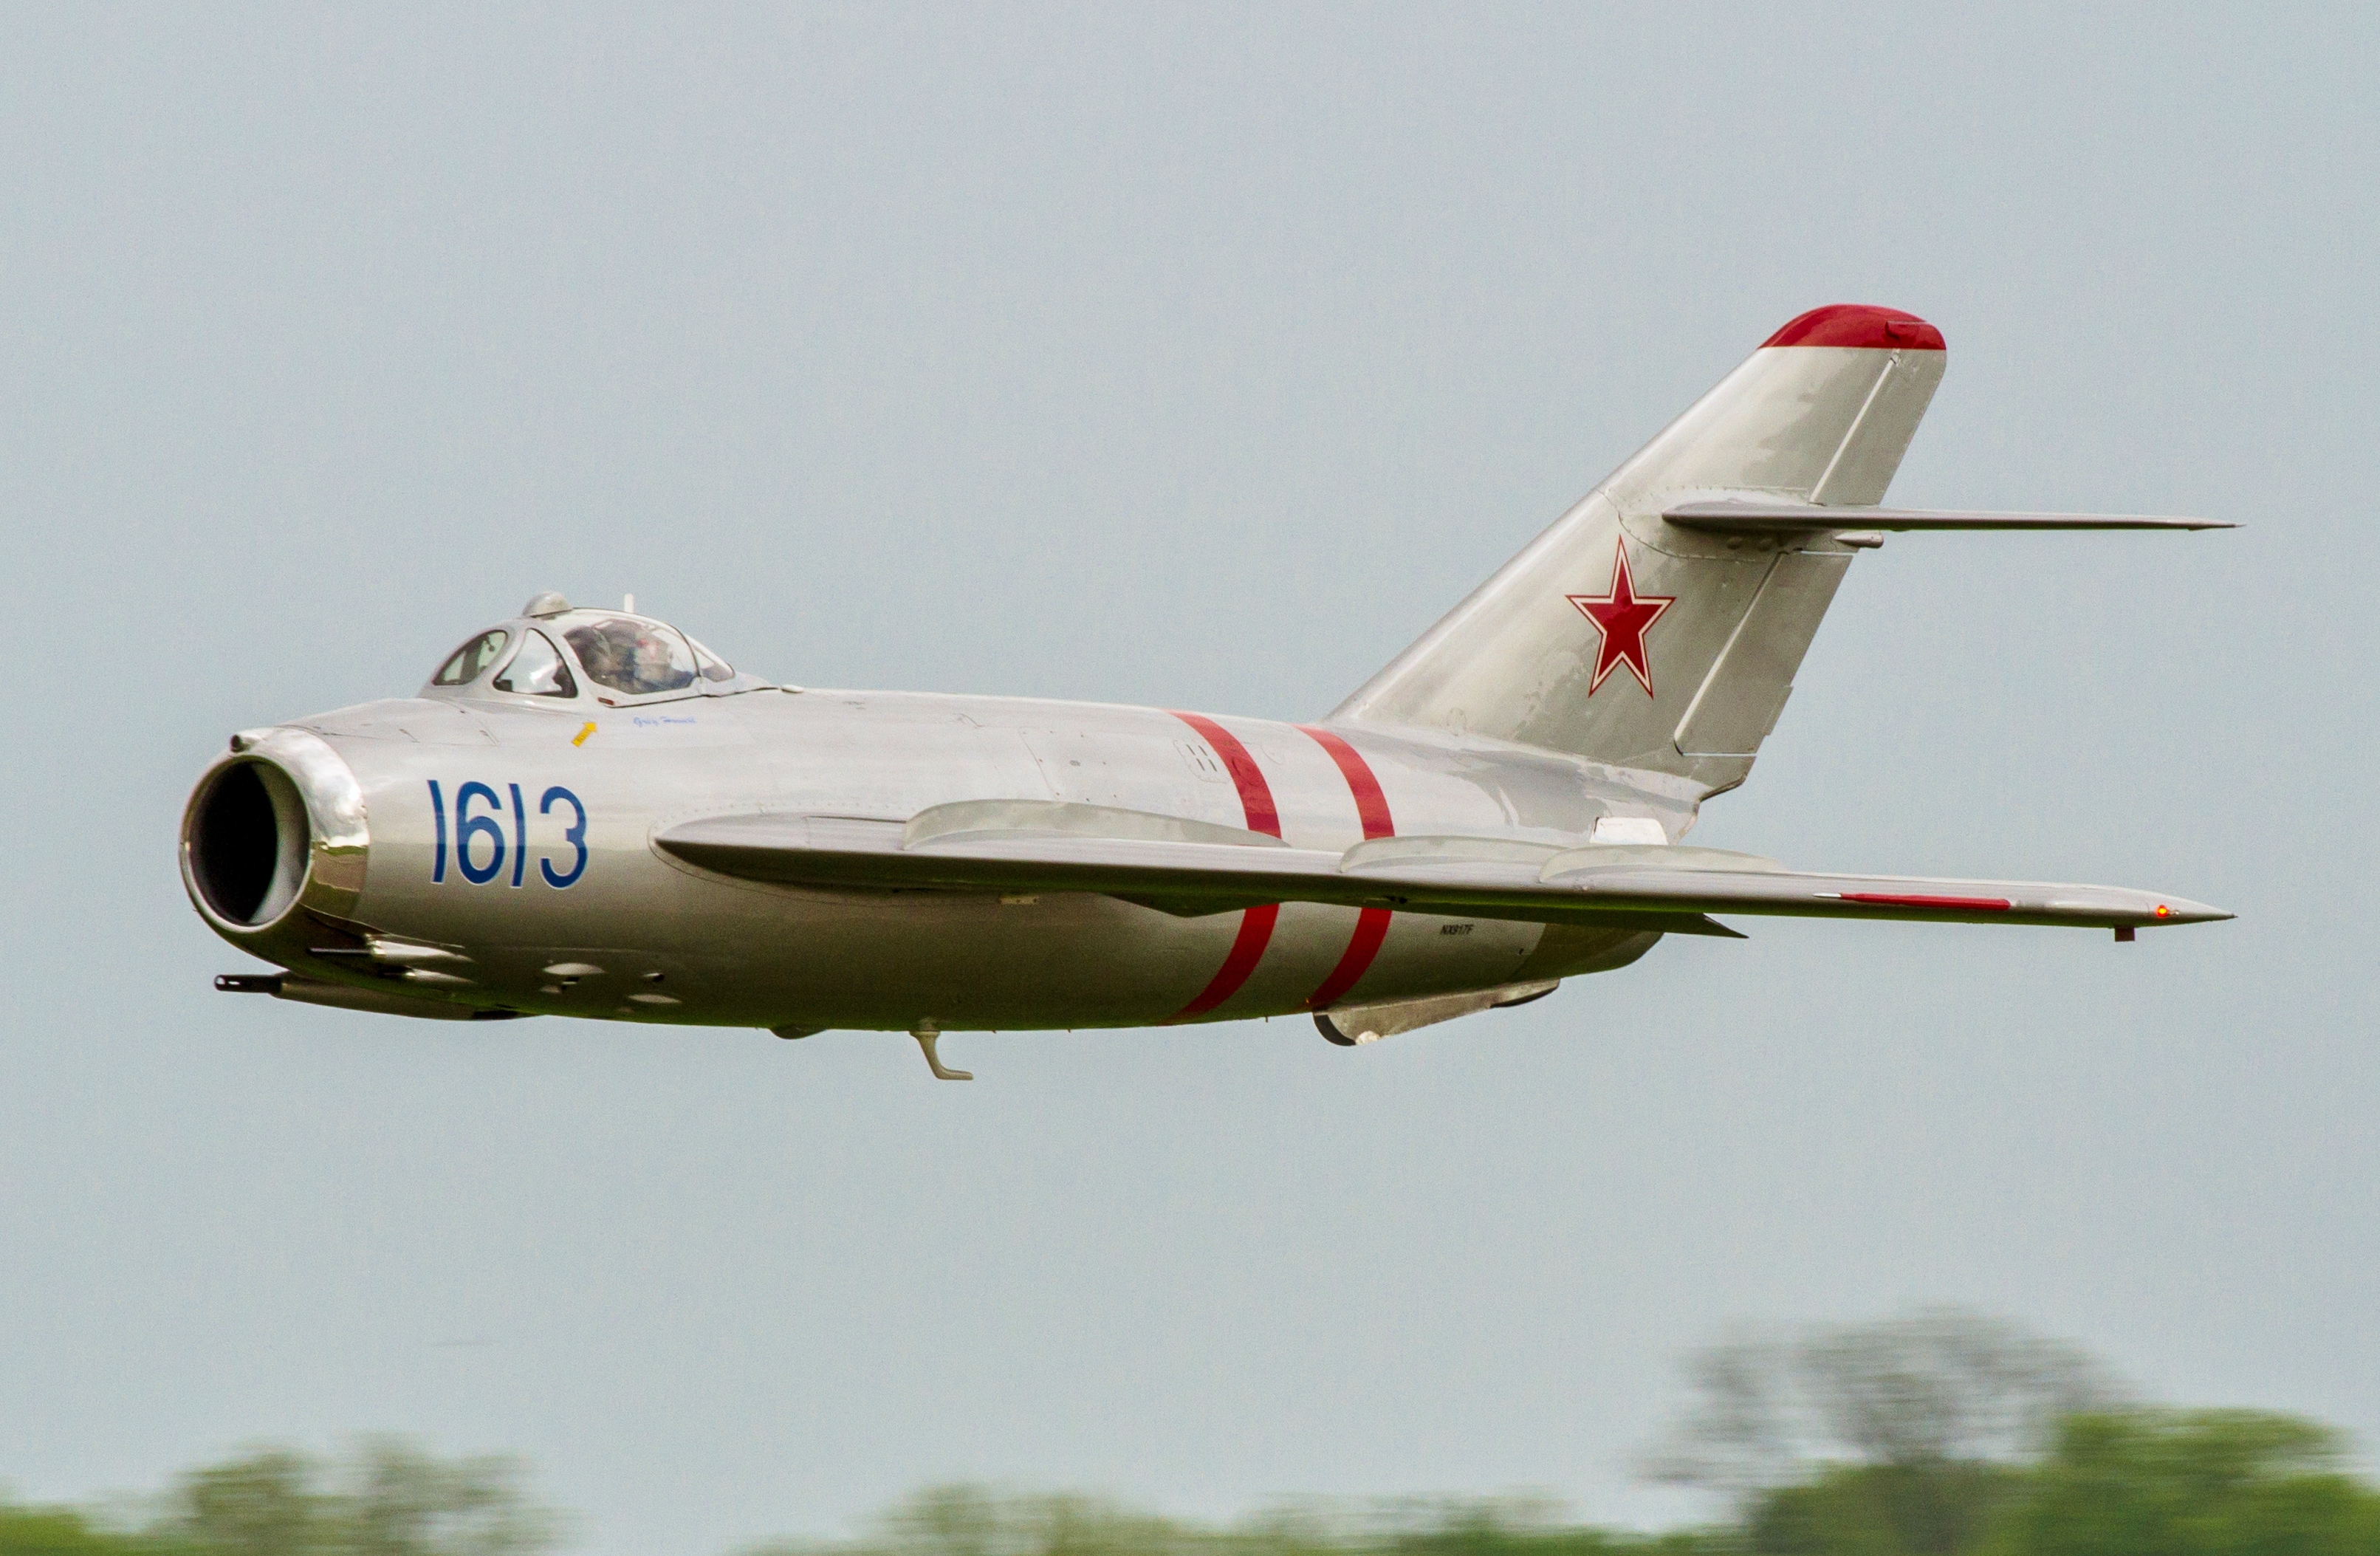 Mikoyan-Gurevich MiG-17 - Wikipedia